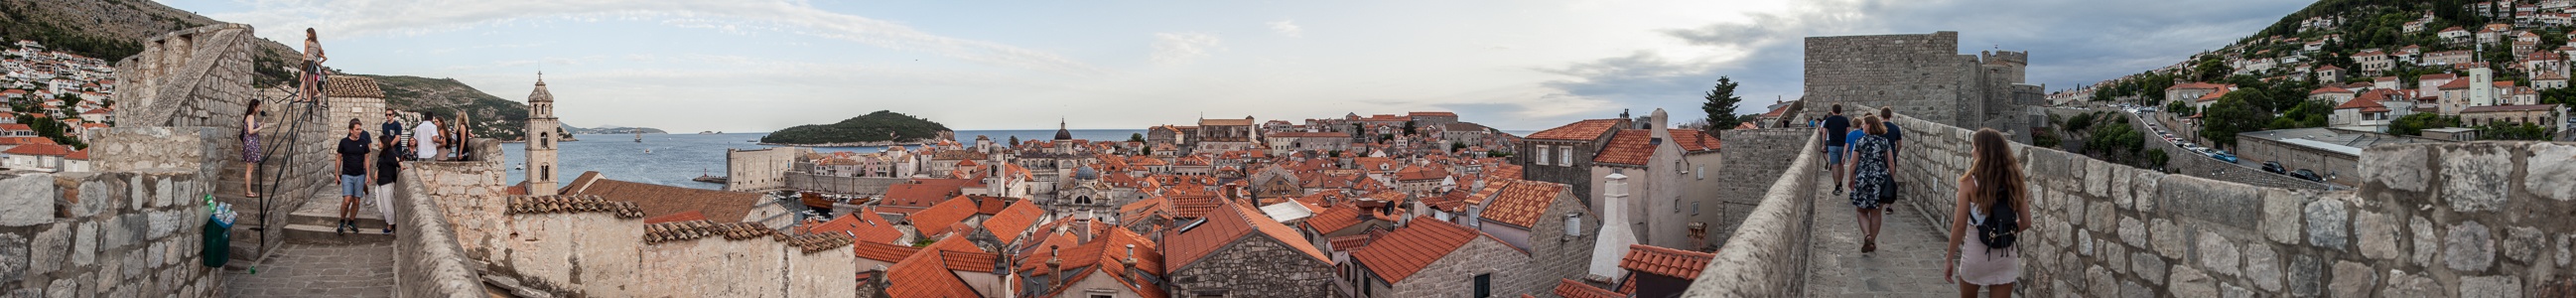 Dubrovnik Blick von der Stadtmauer: Altstadt (Grad)